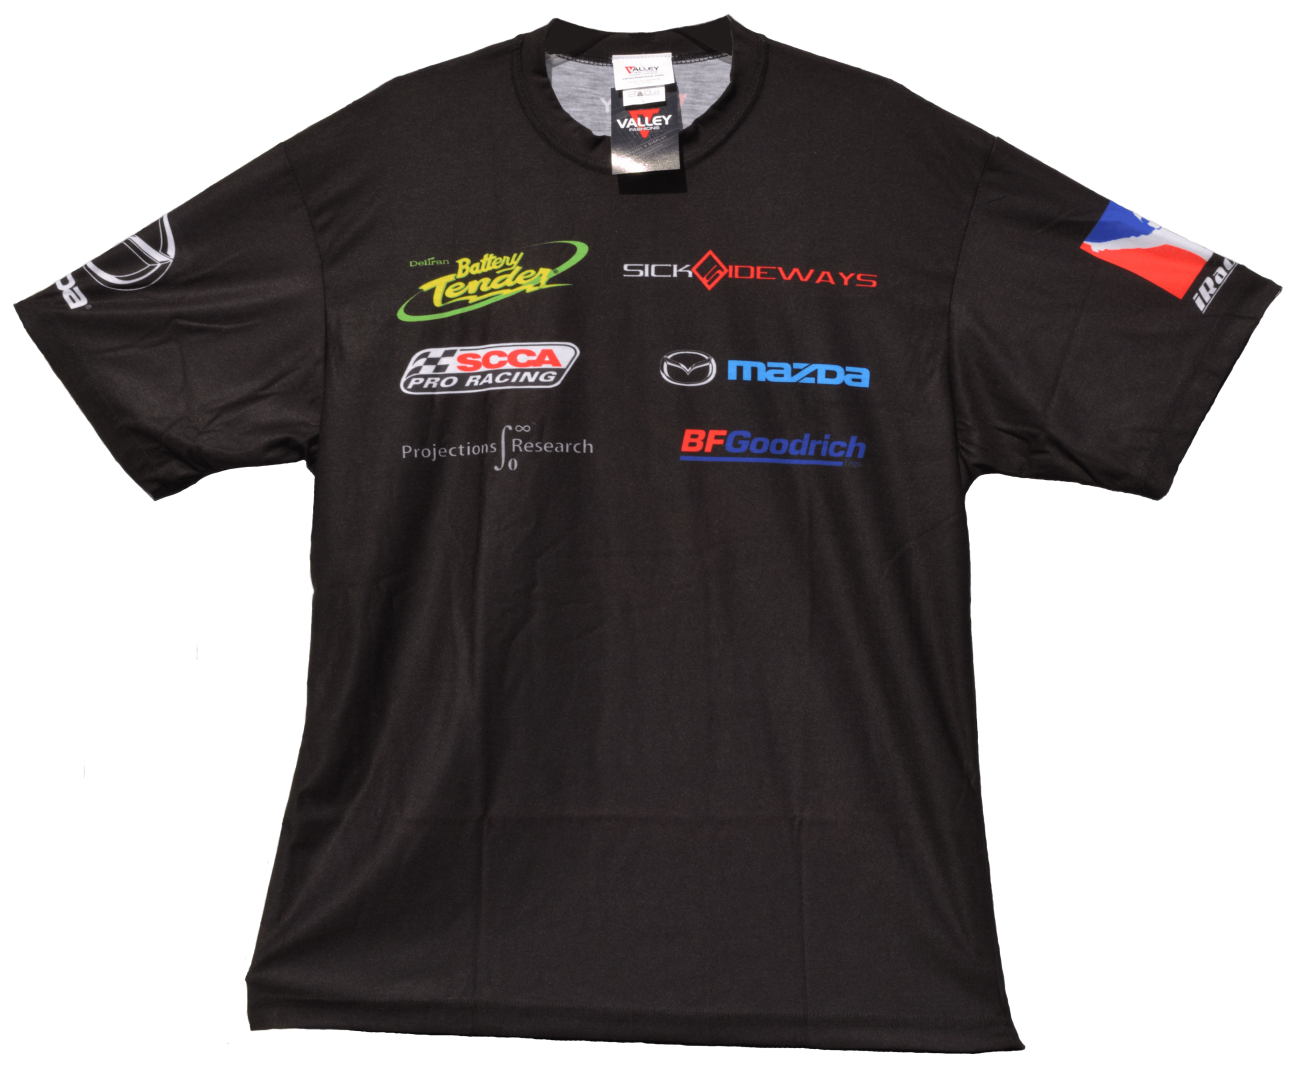 Sick Sideways Racing Shirt with SSR Logo and Sponsors Logos (XX Large Size)  | Sick Sideways